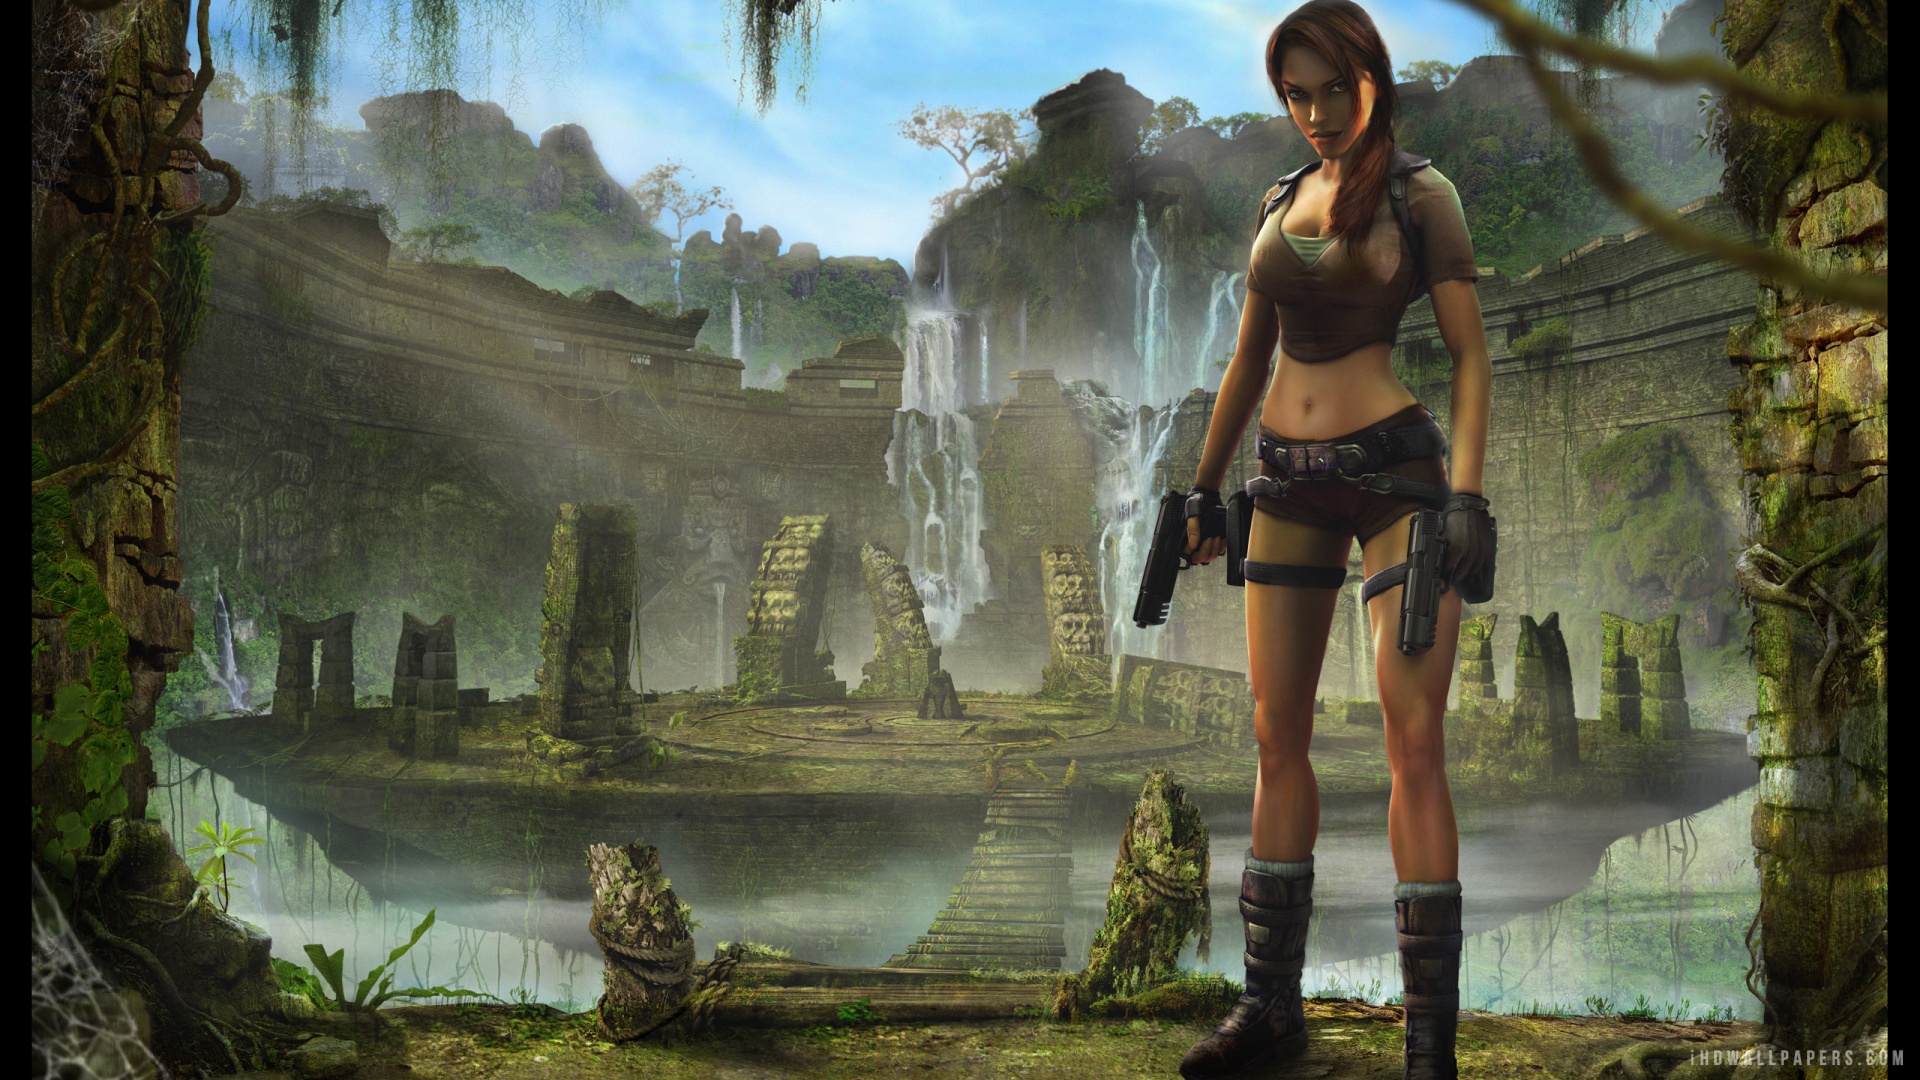 Tomb Raider Hd Wallpaper Background Image 1920x1080 9095